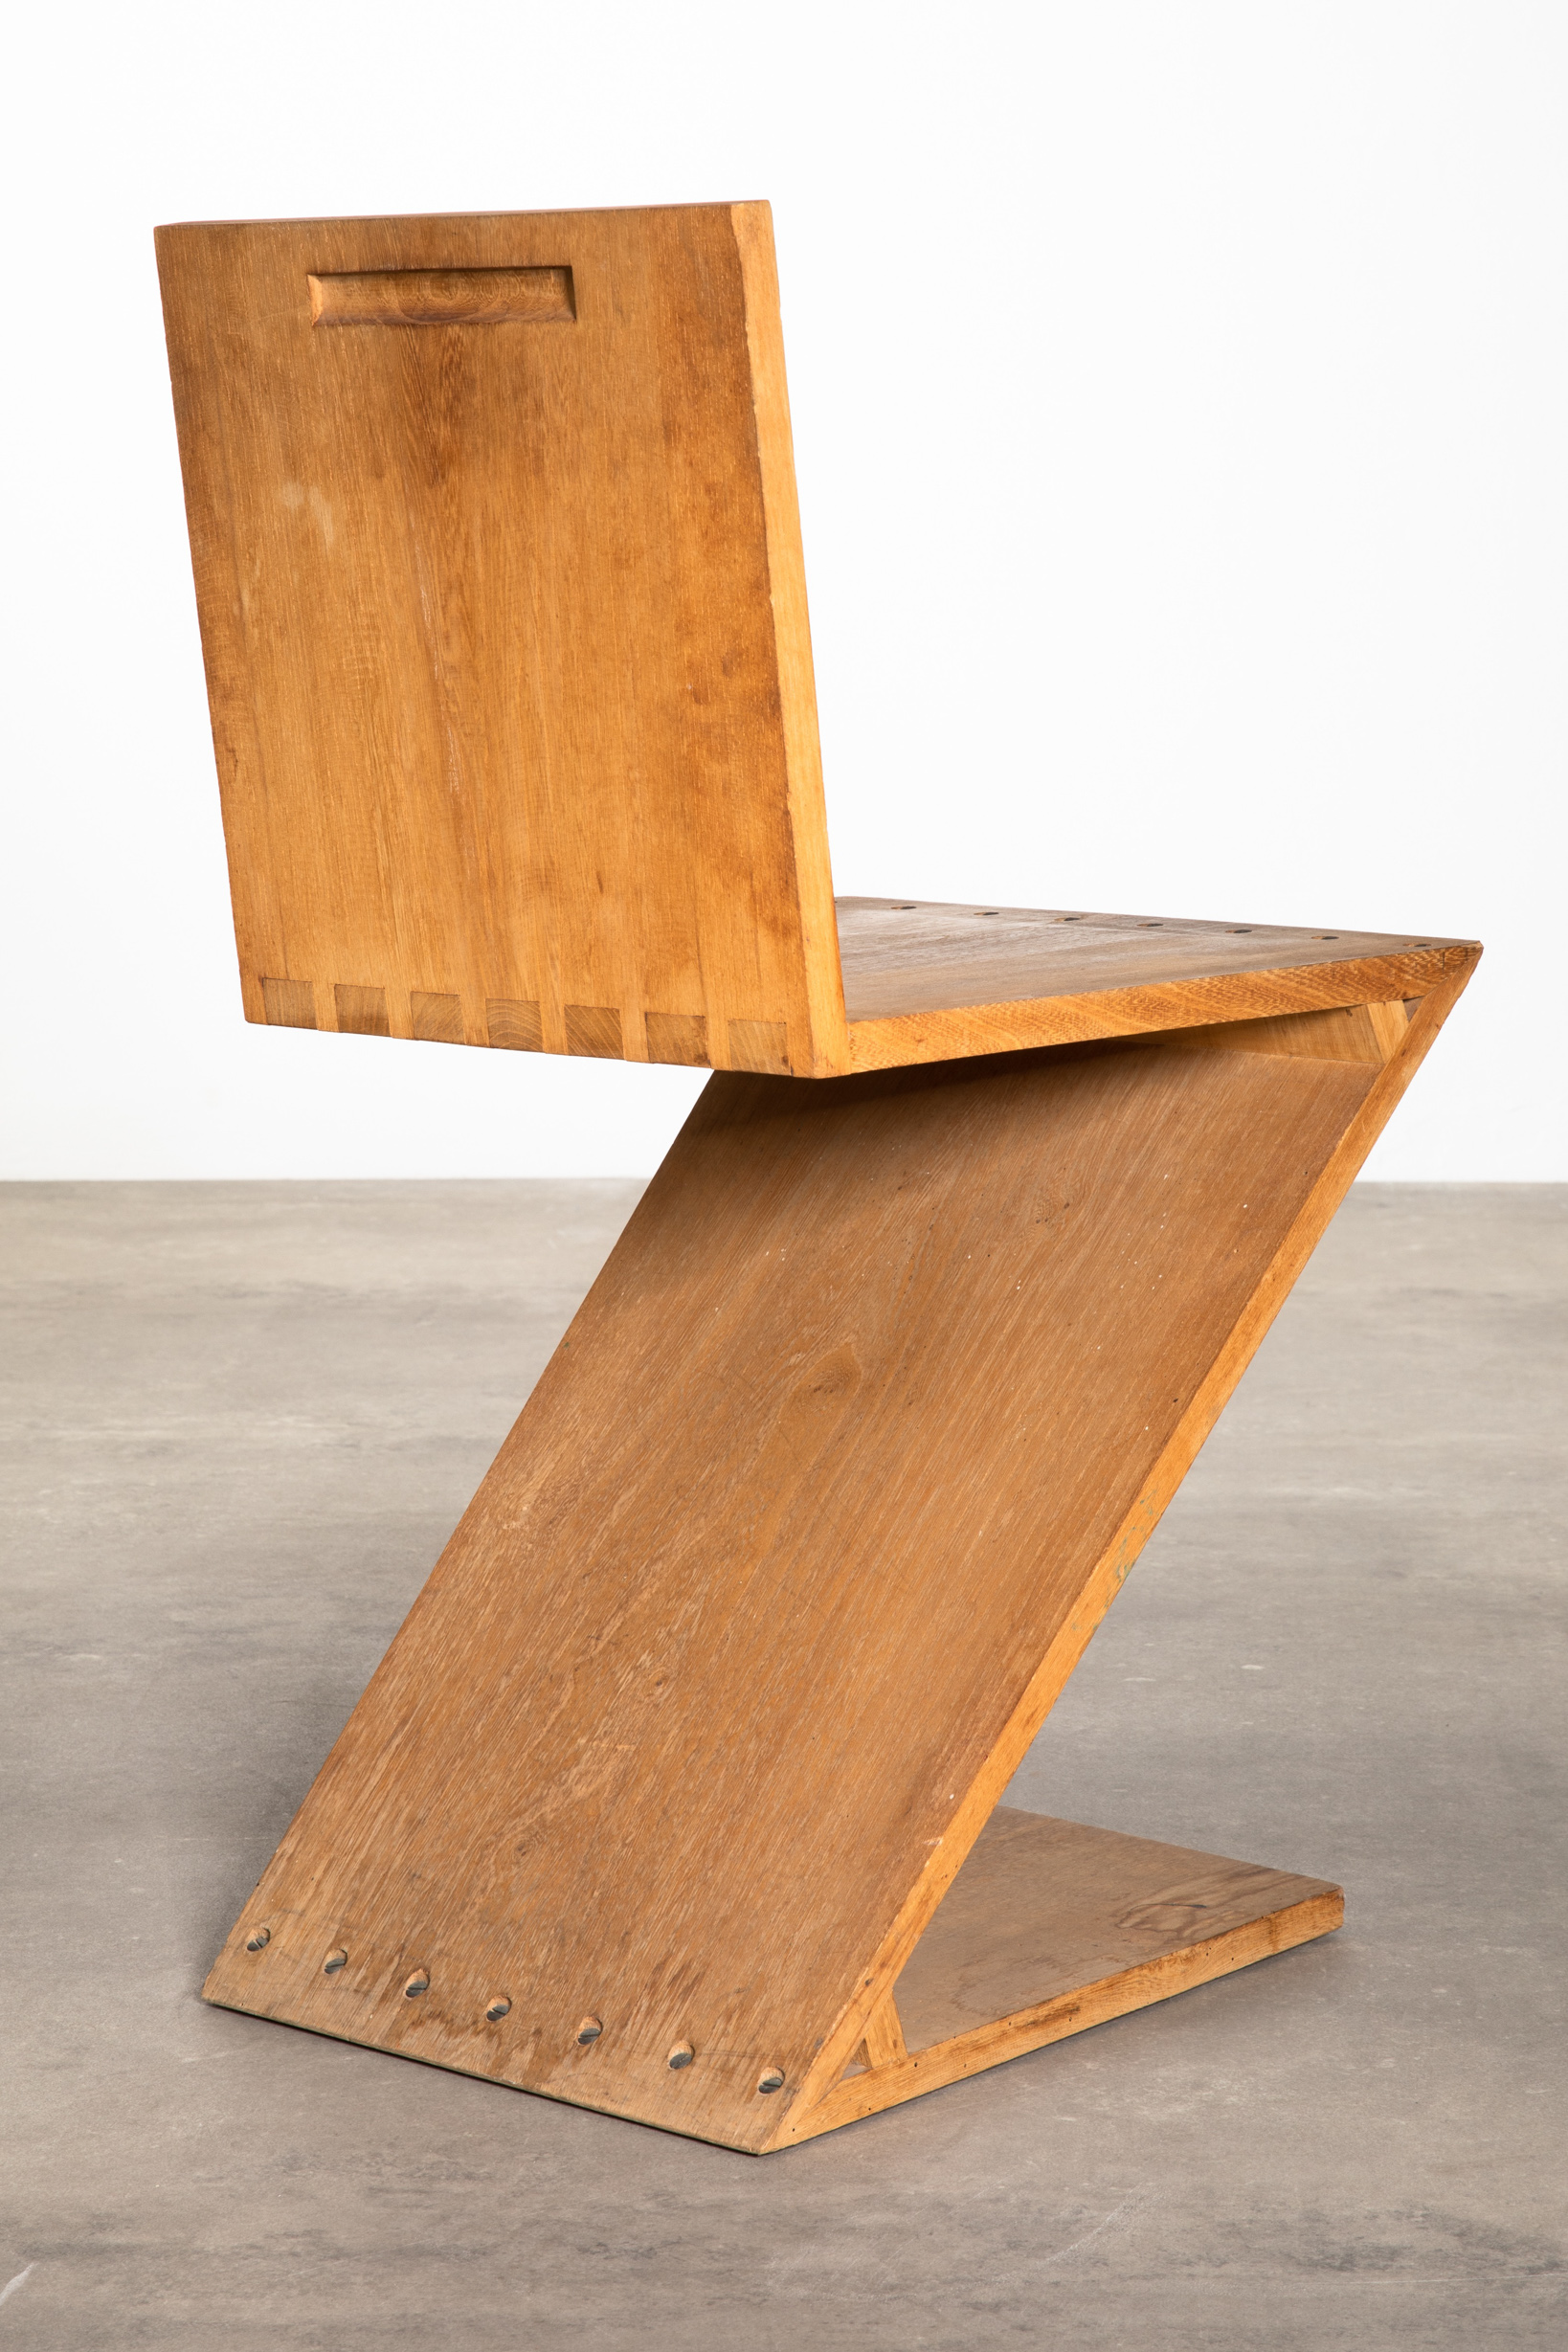 Gerrit Rietveld, G.A.v.d. Groenekan, Zig Zag Chair - Image 2 of 7